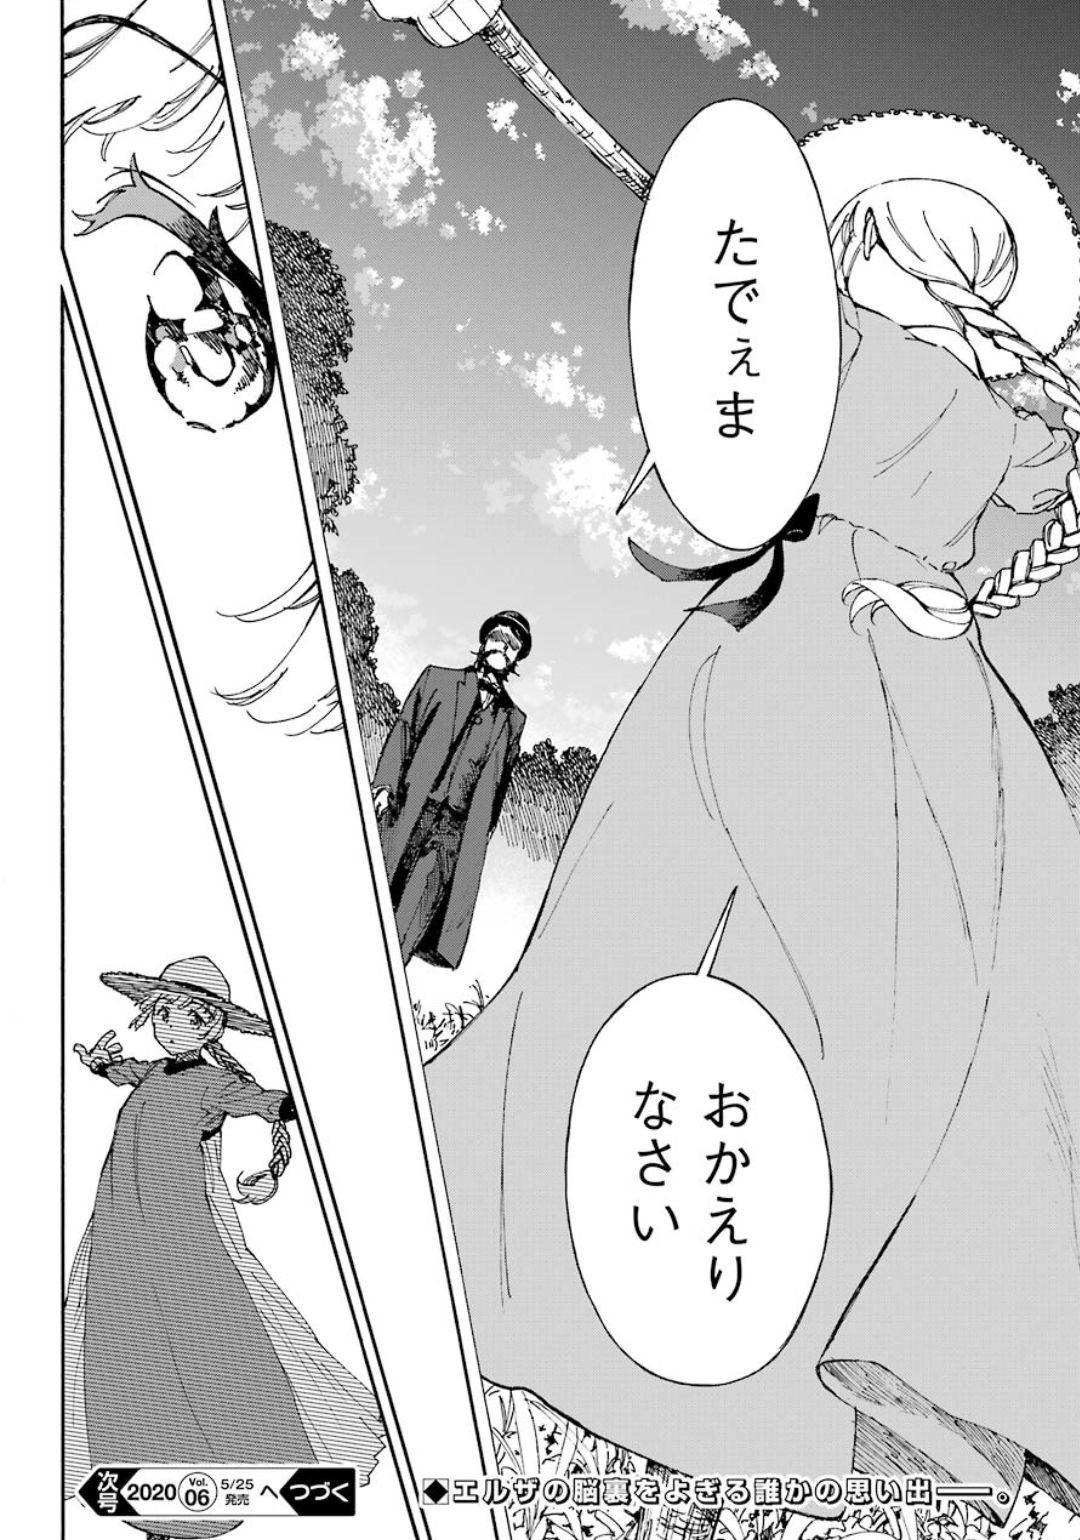 Hotomeku-kakashi - Chapter 04-1 - Page 16